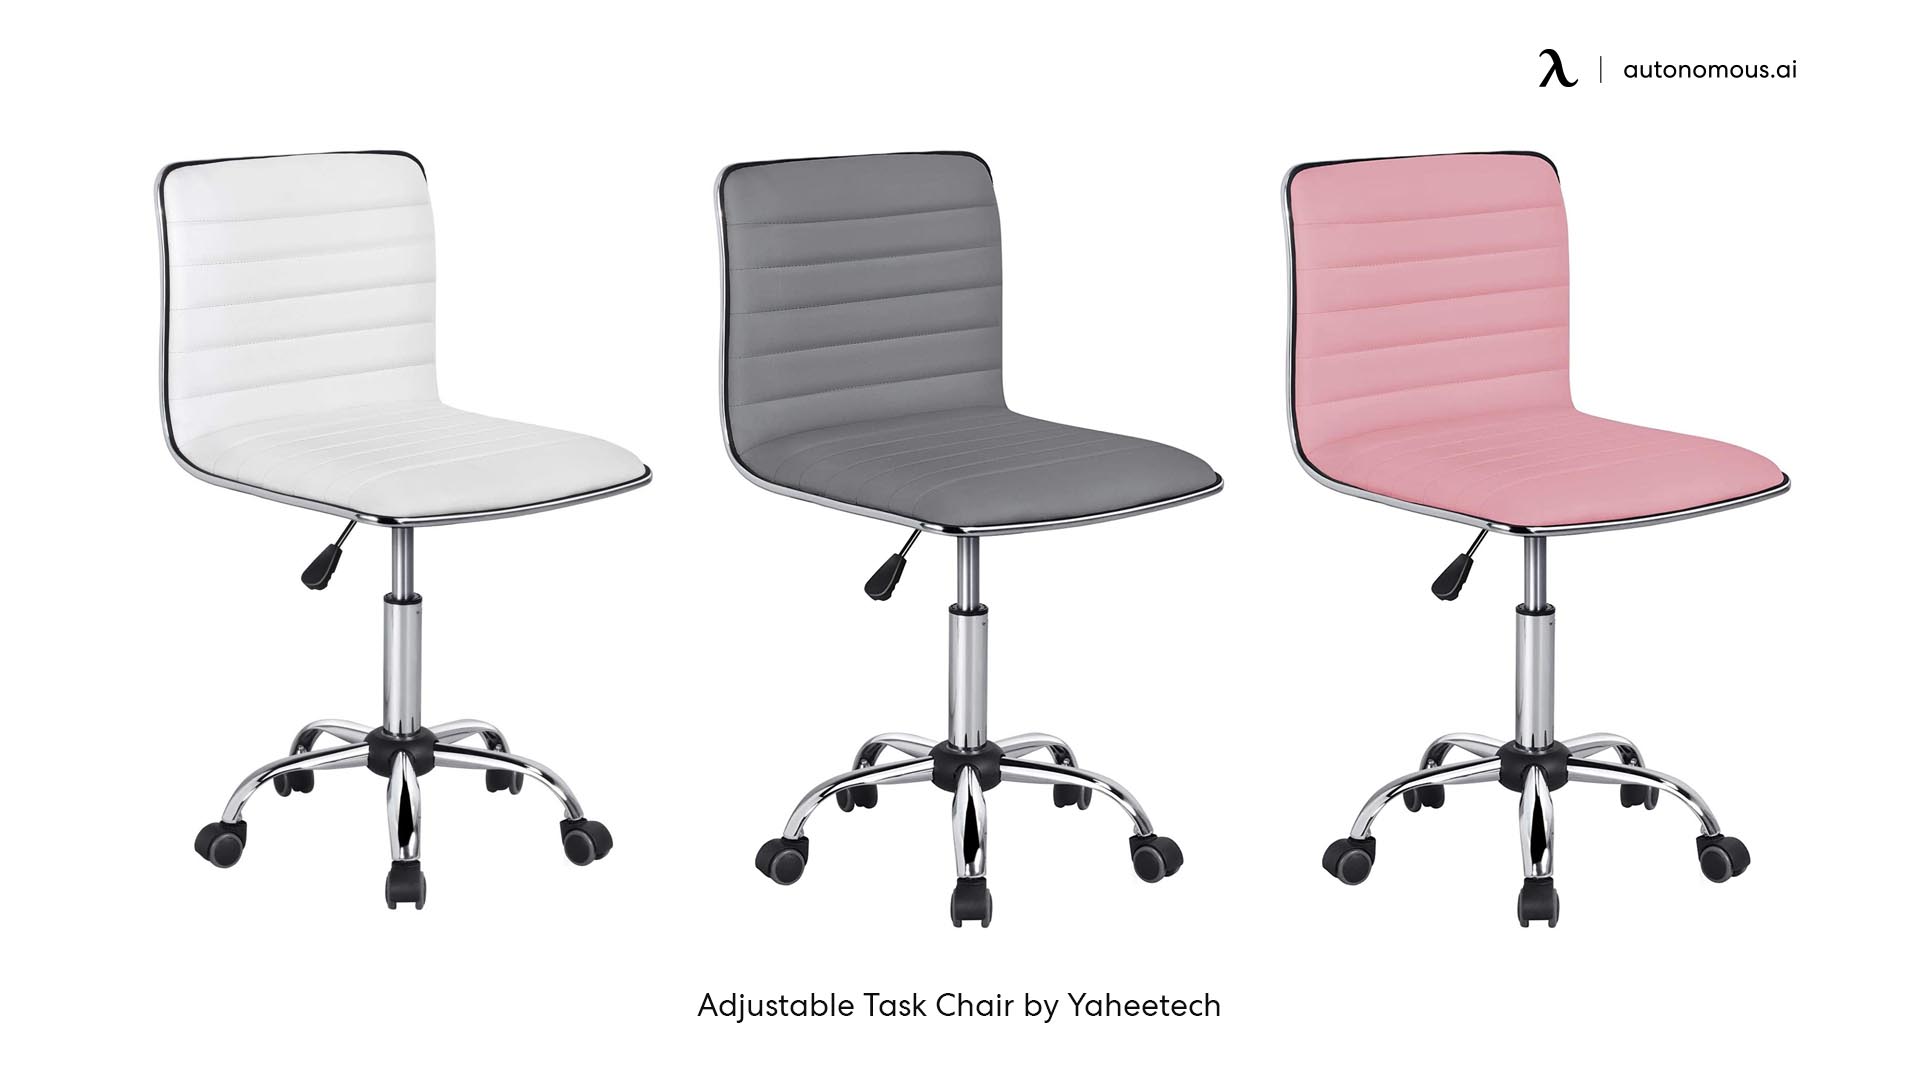 Yaheetech Adjustable Task Chair